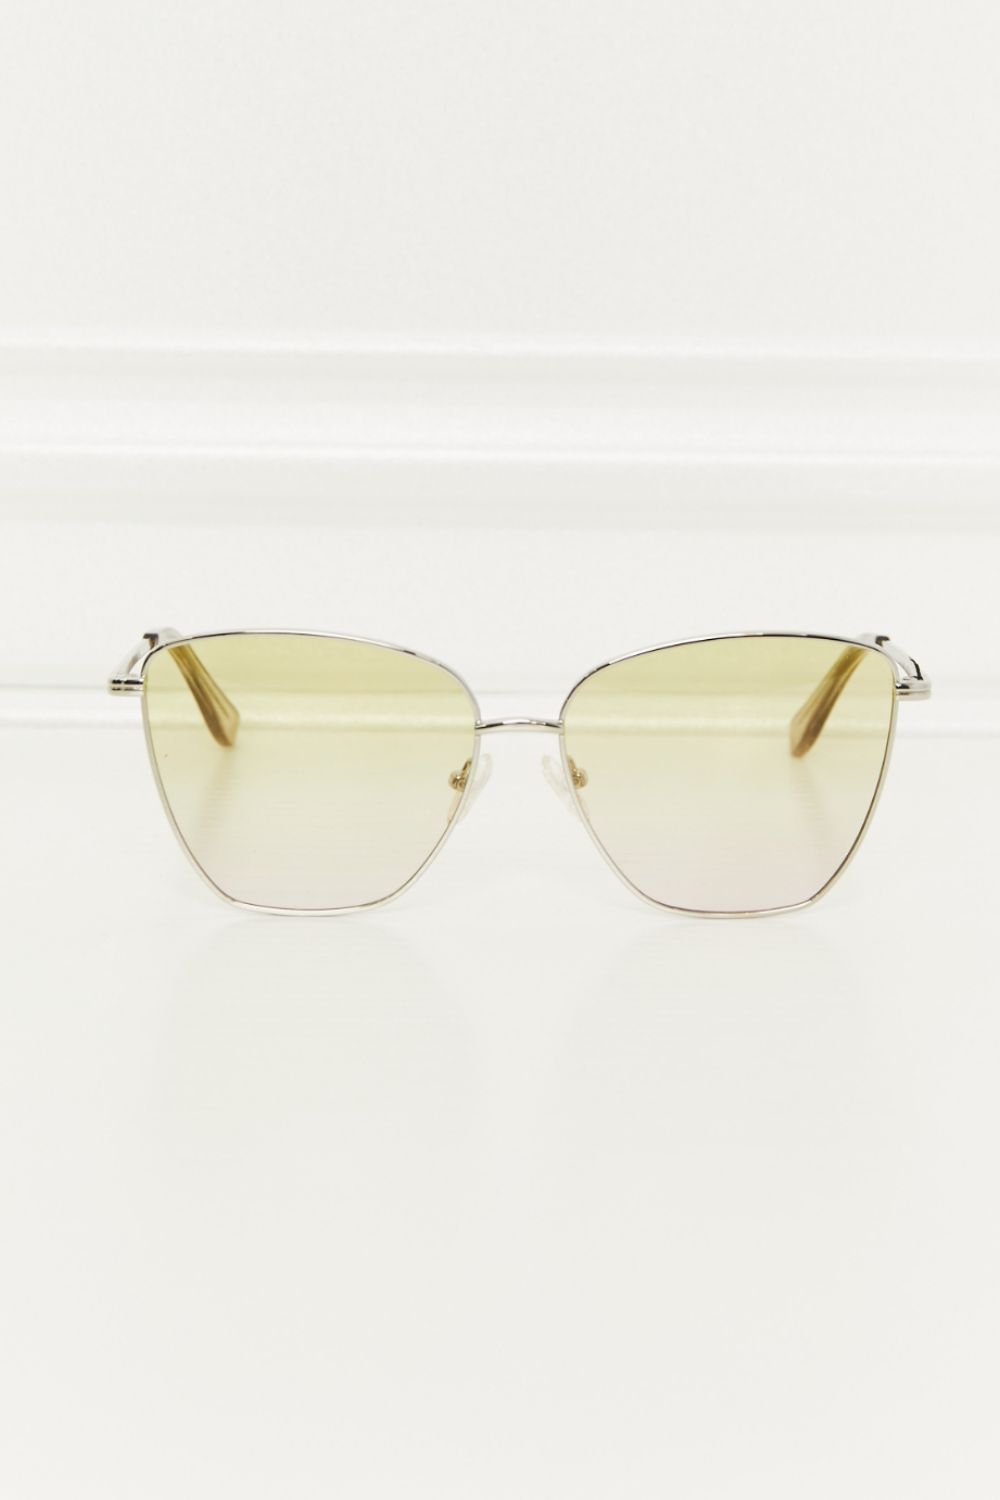 Uylee’s Boutique Metal Frame Full Rim Sunglasses